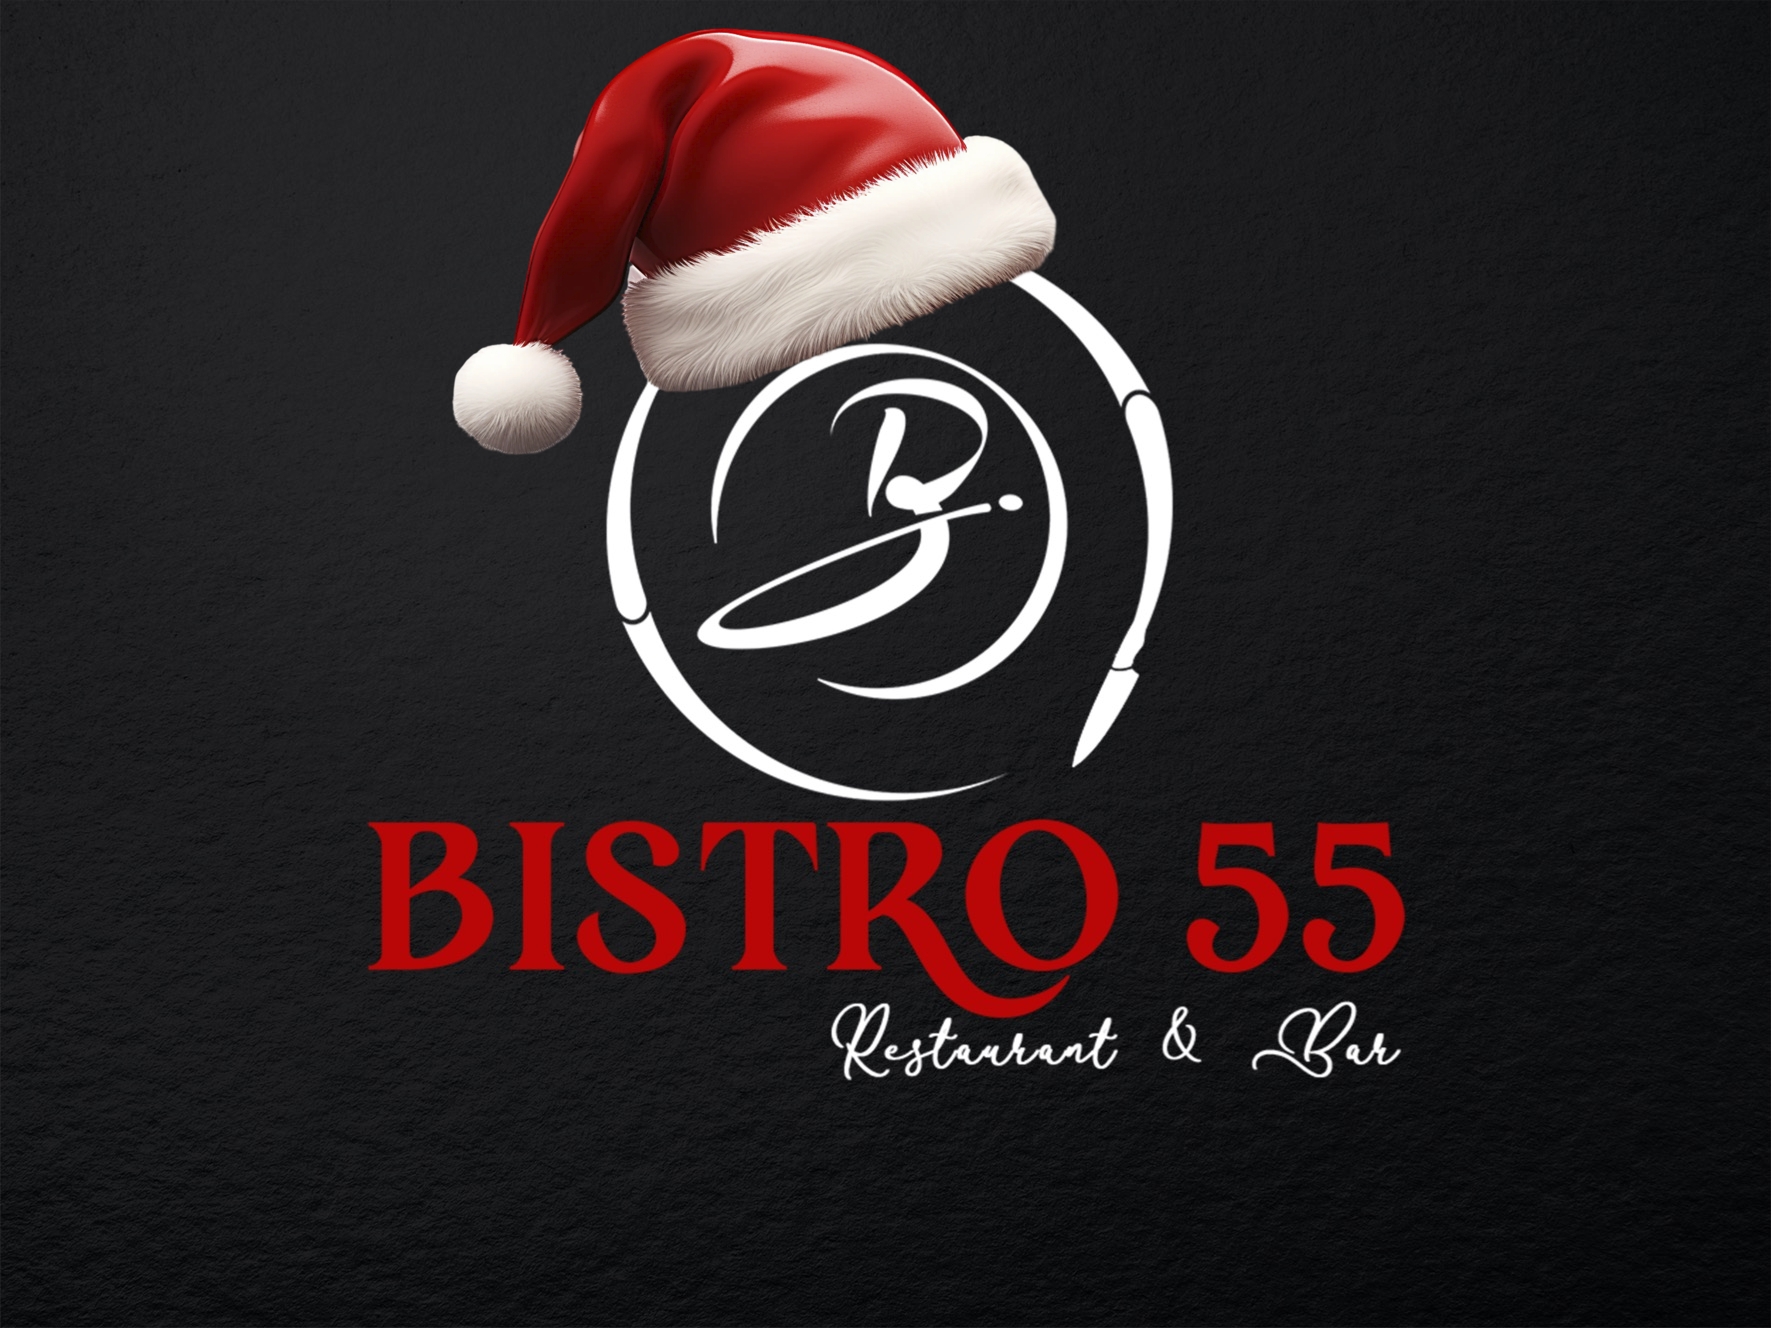 Bistro55